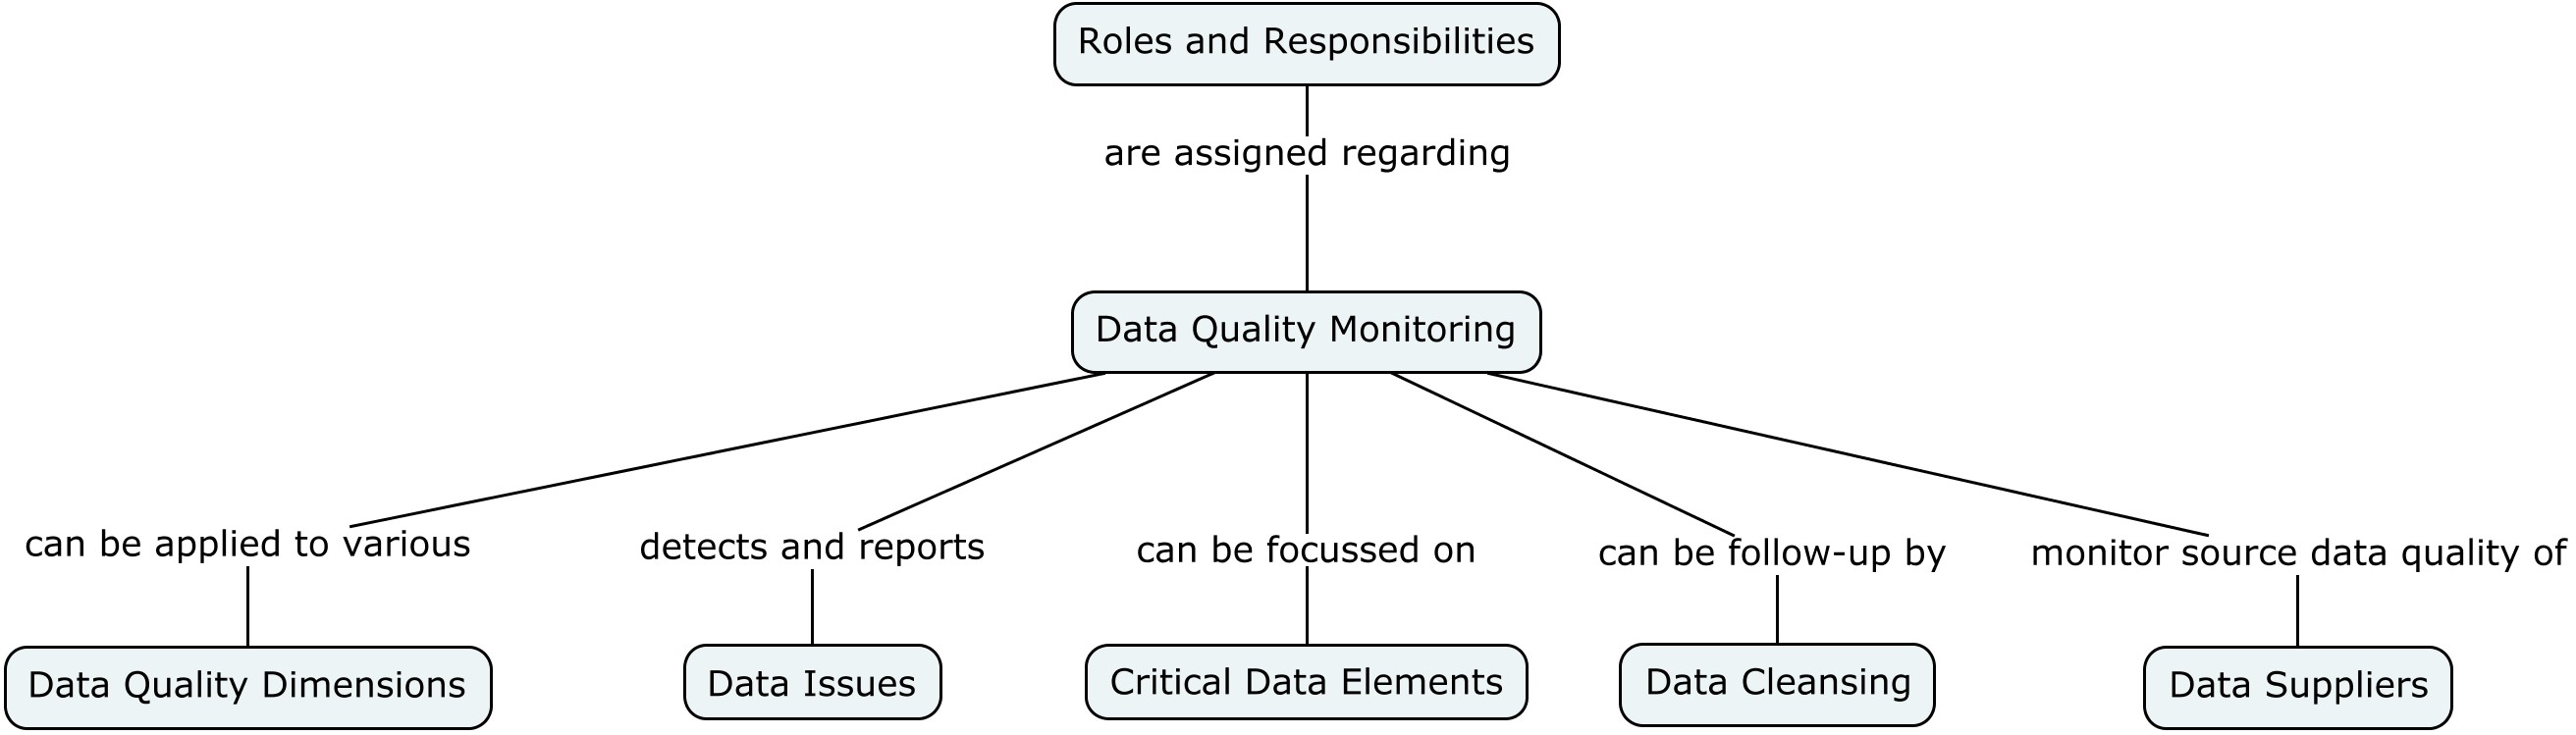 data_quality_monitoring.jpg